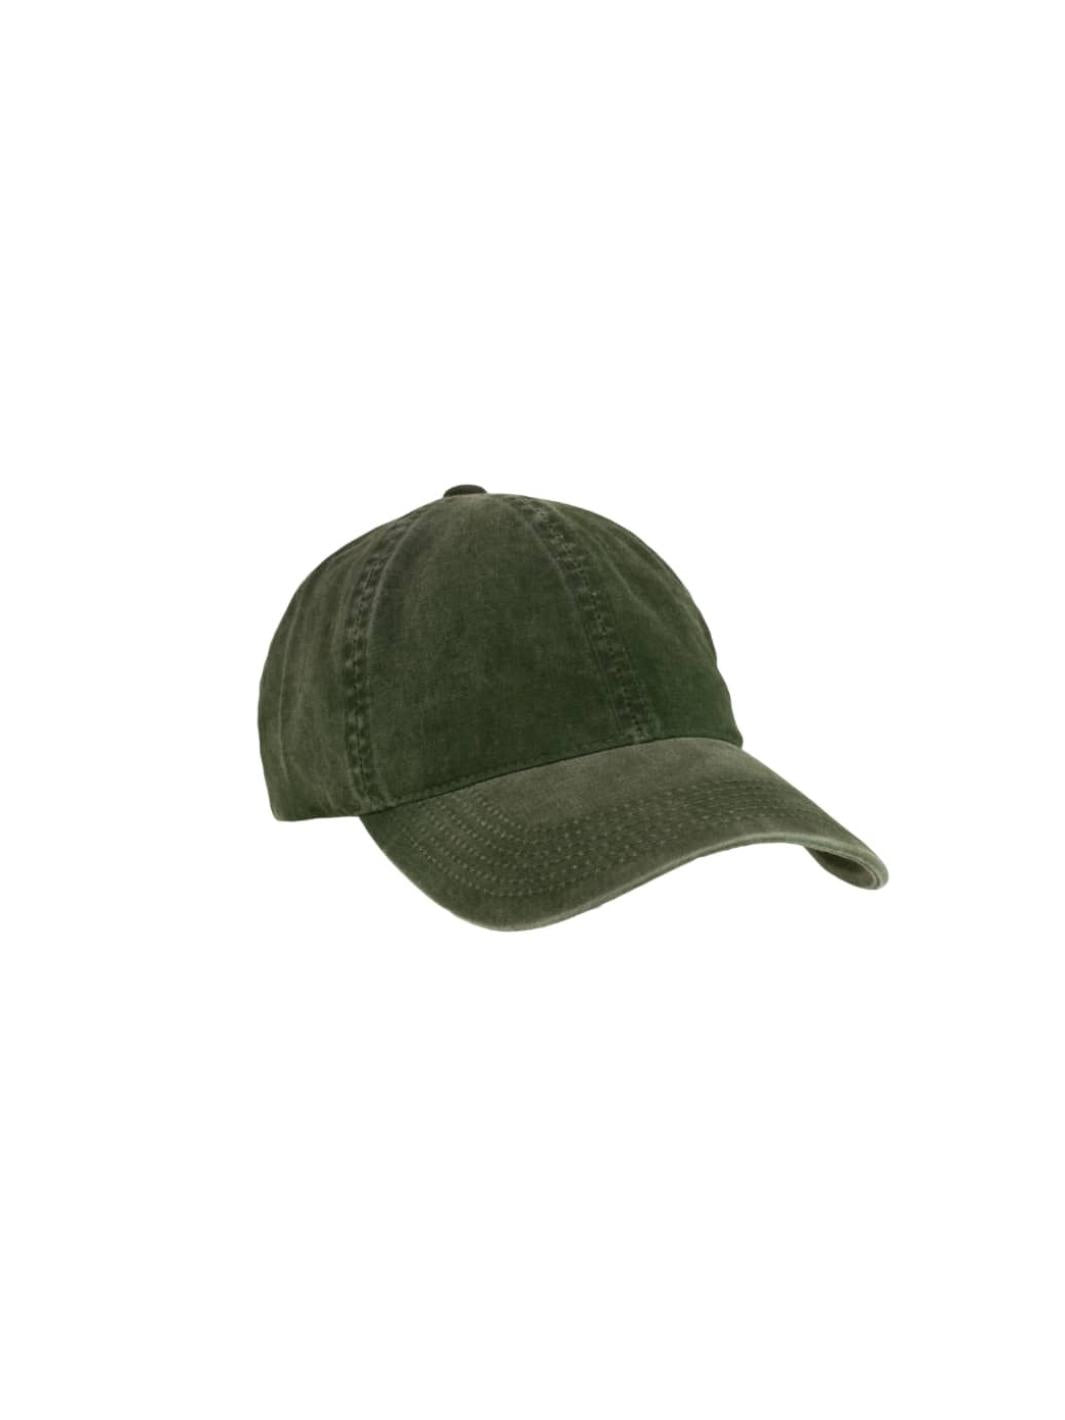 Varsity Headwear Accessories Cap | Green Washed Cotton